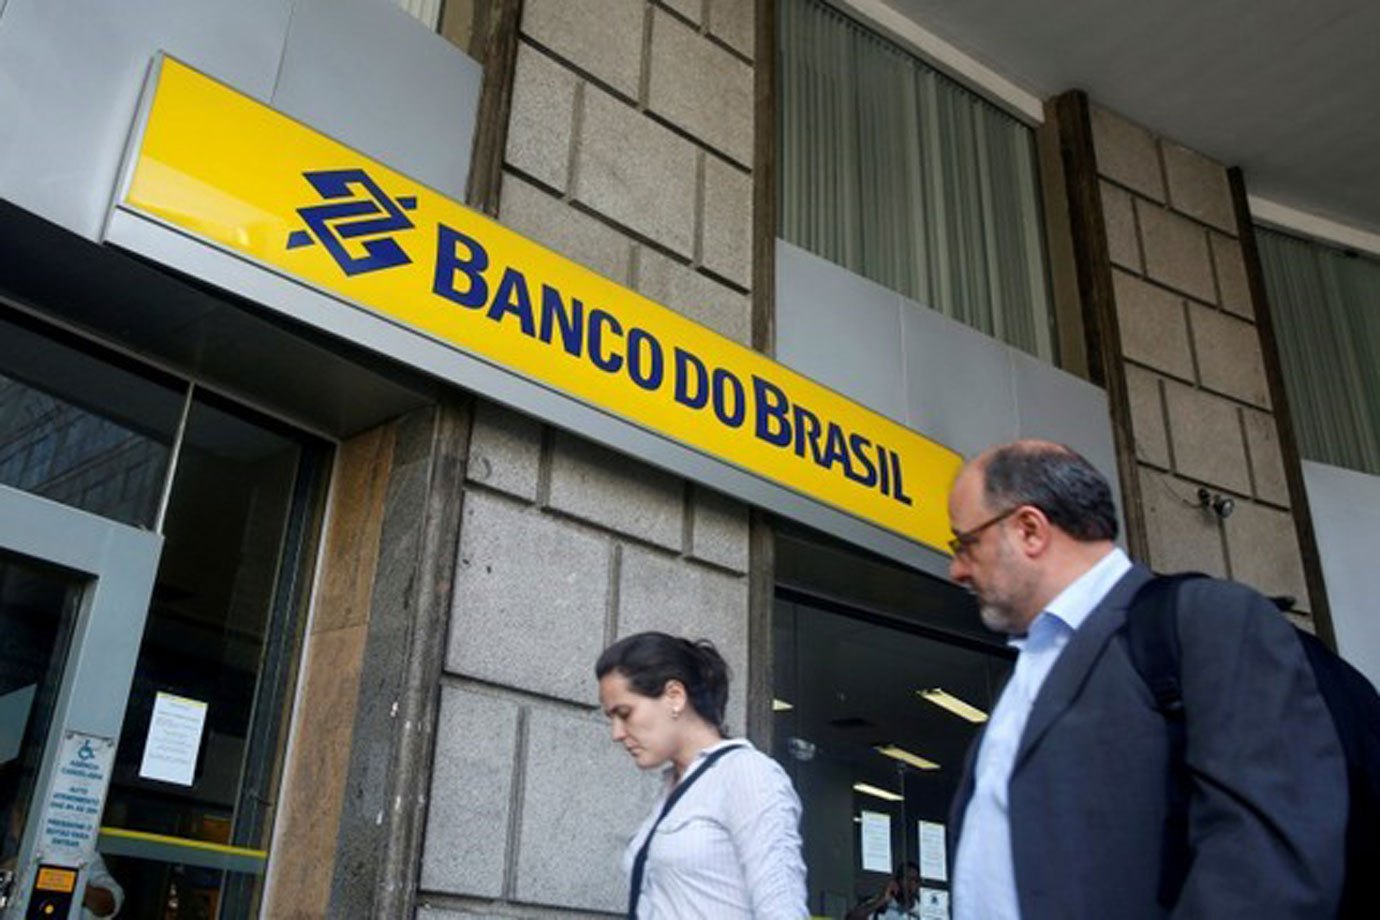 Encontre o edital do Concurso do Banco do Brasil e tire todas as dúvidas